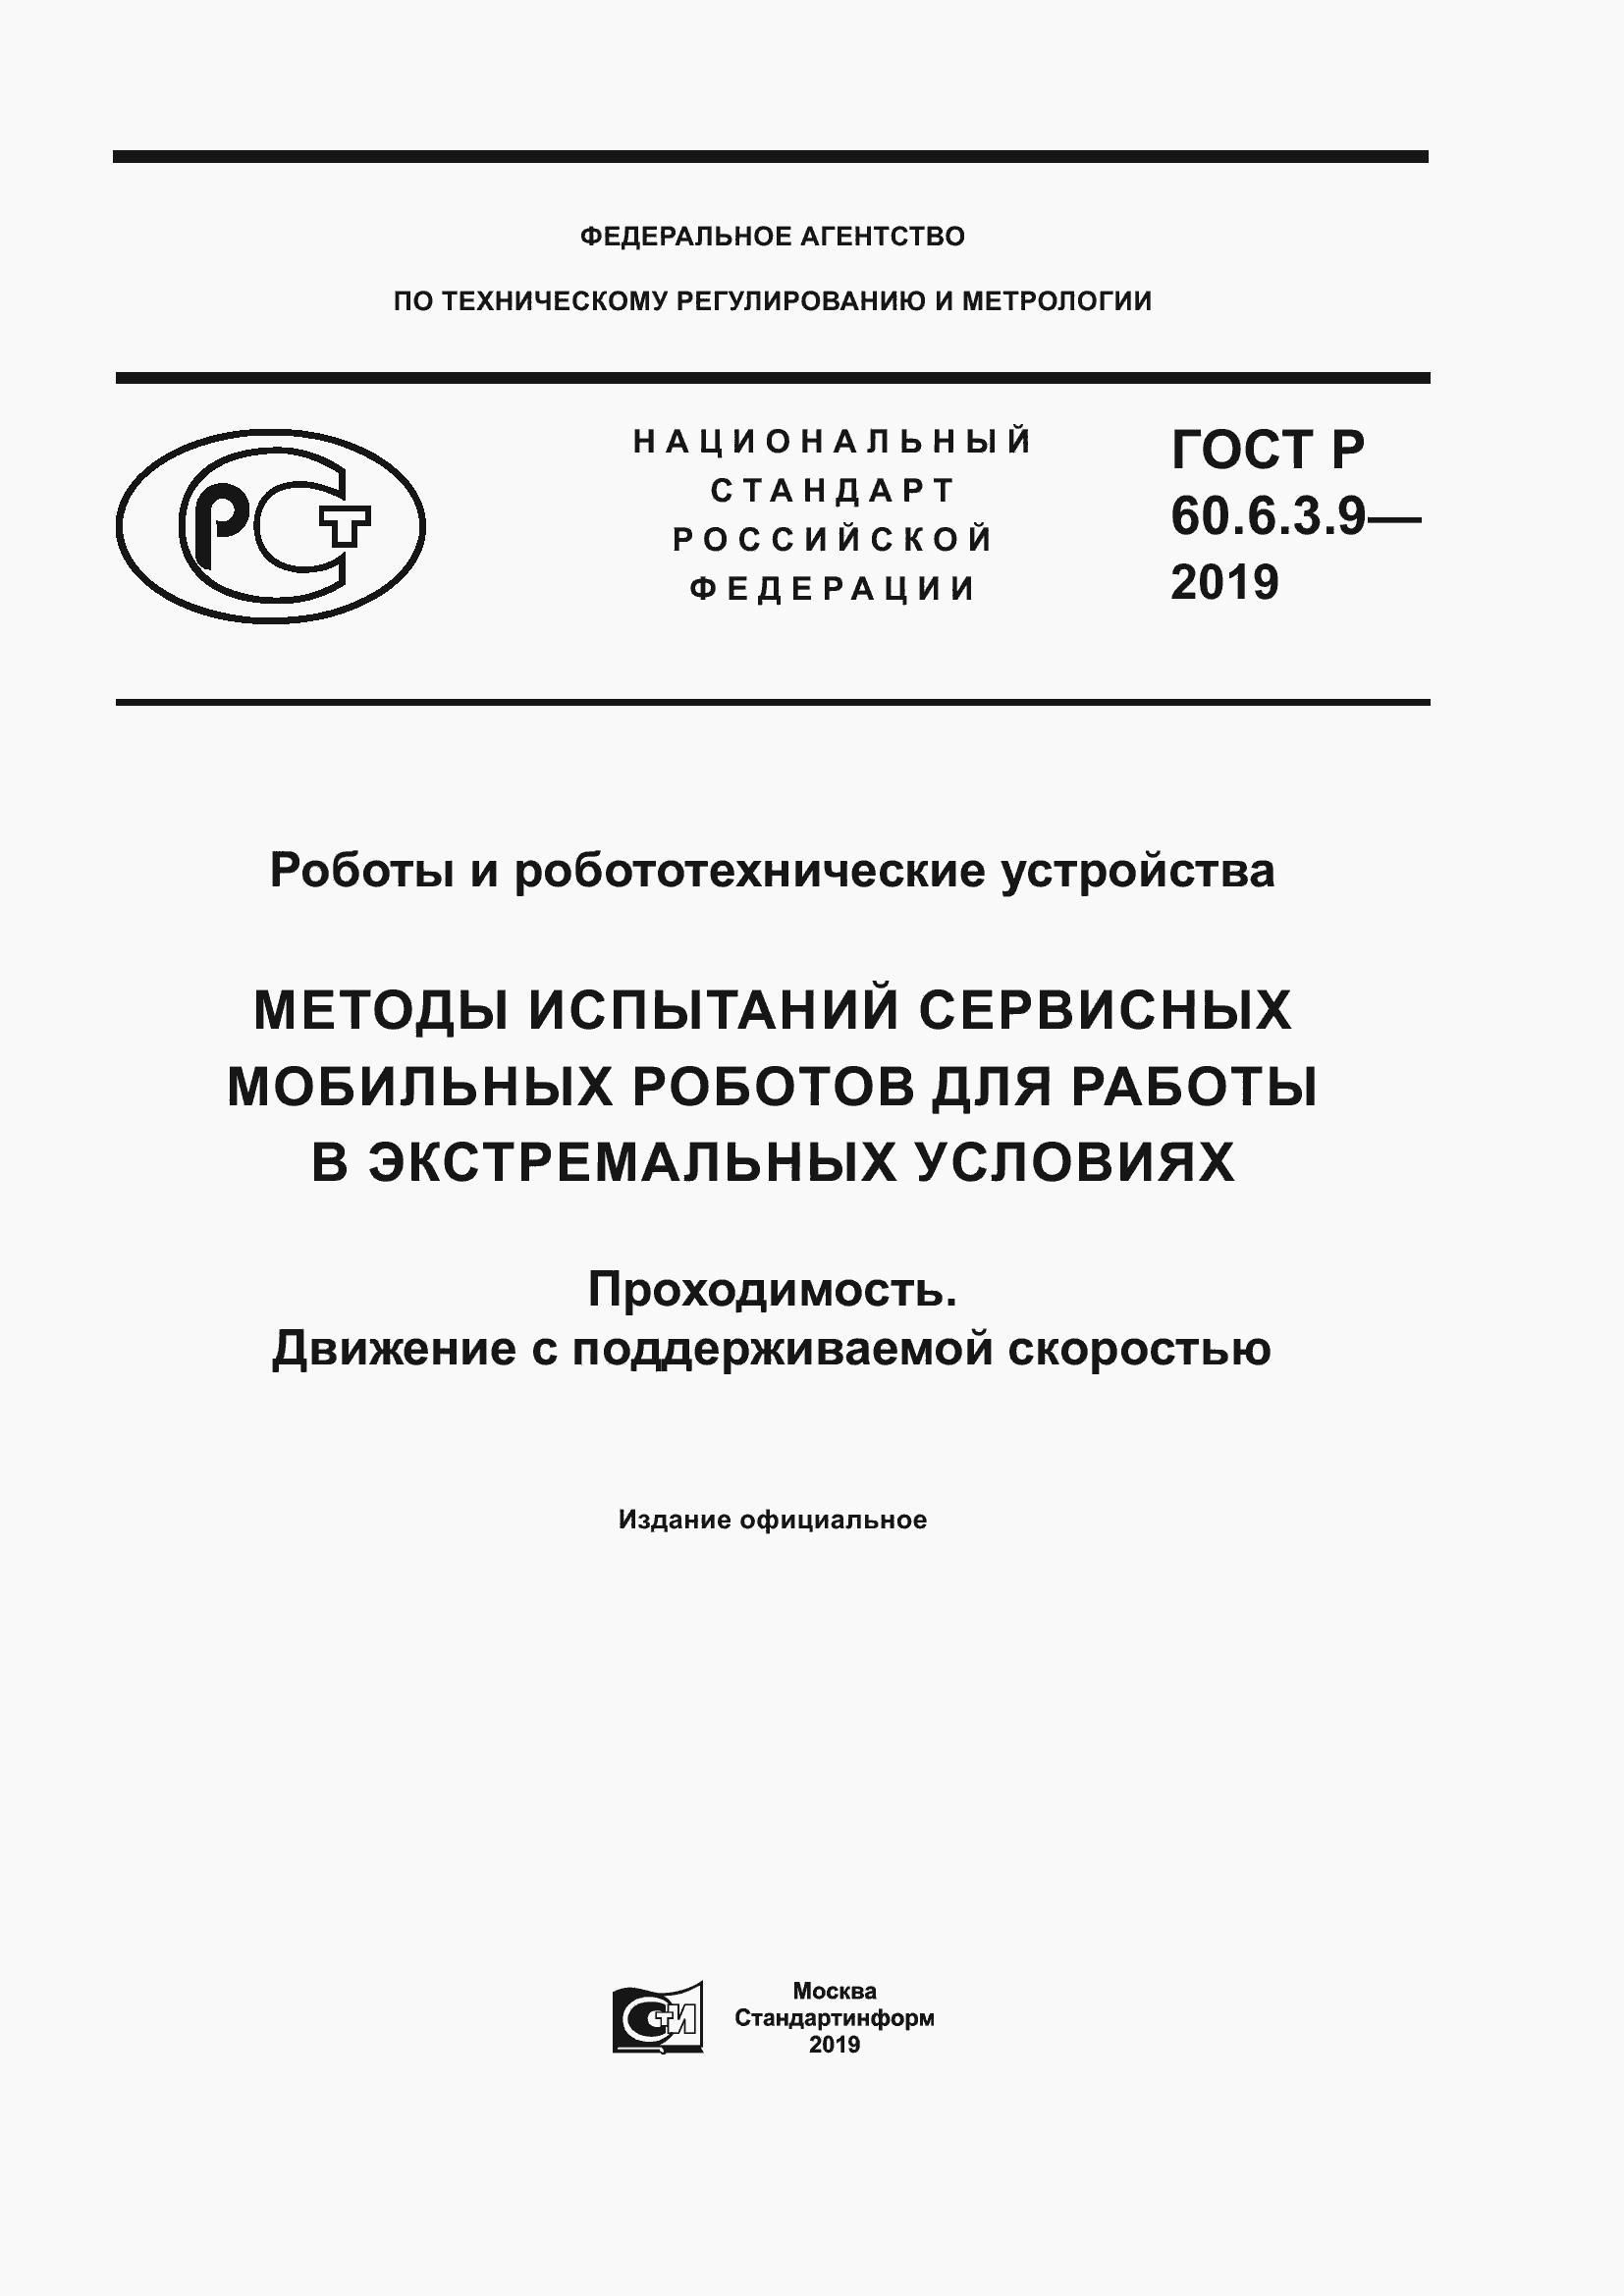 ГОСТ Р 60.6.3.9-2019. Страница 1